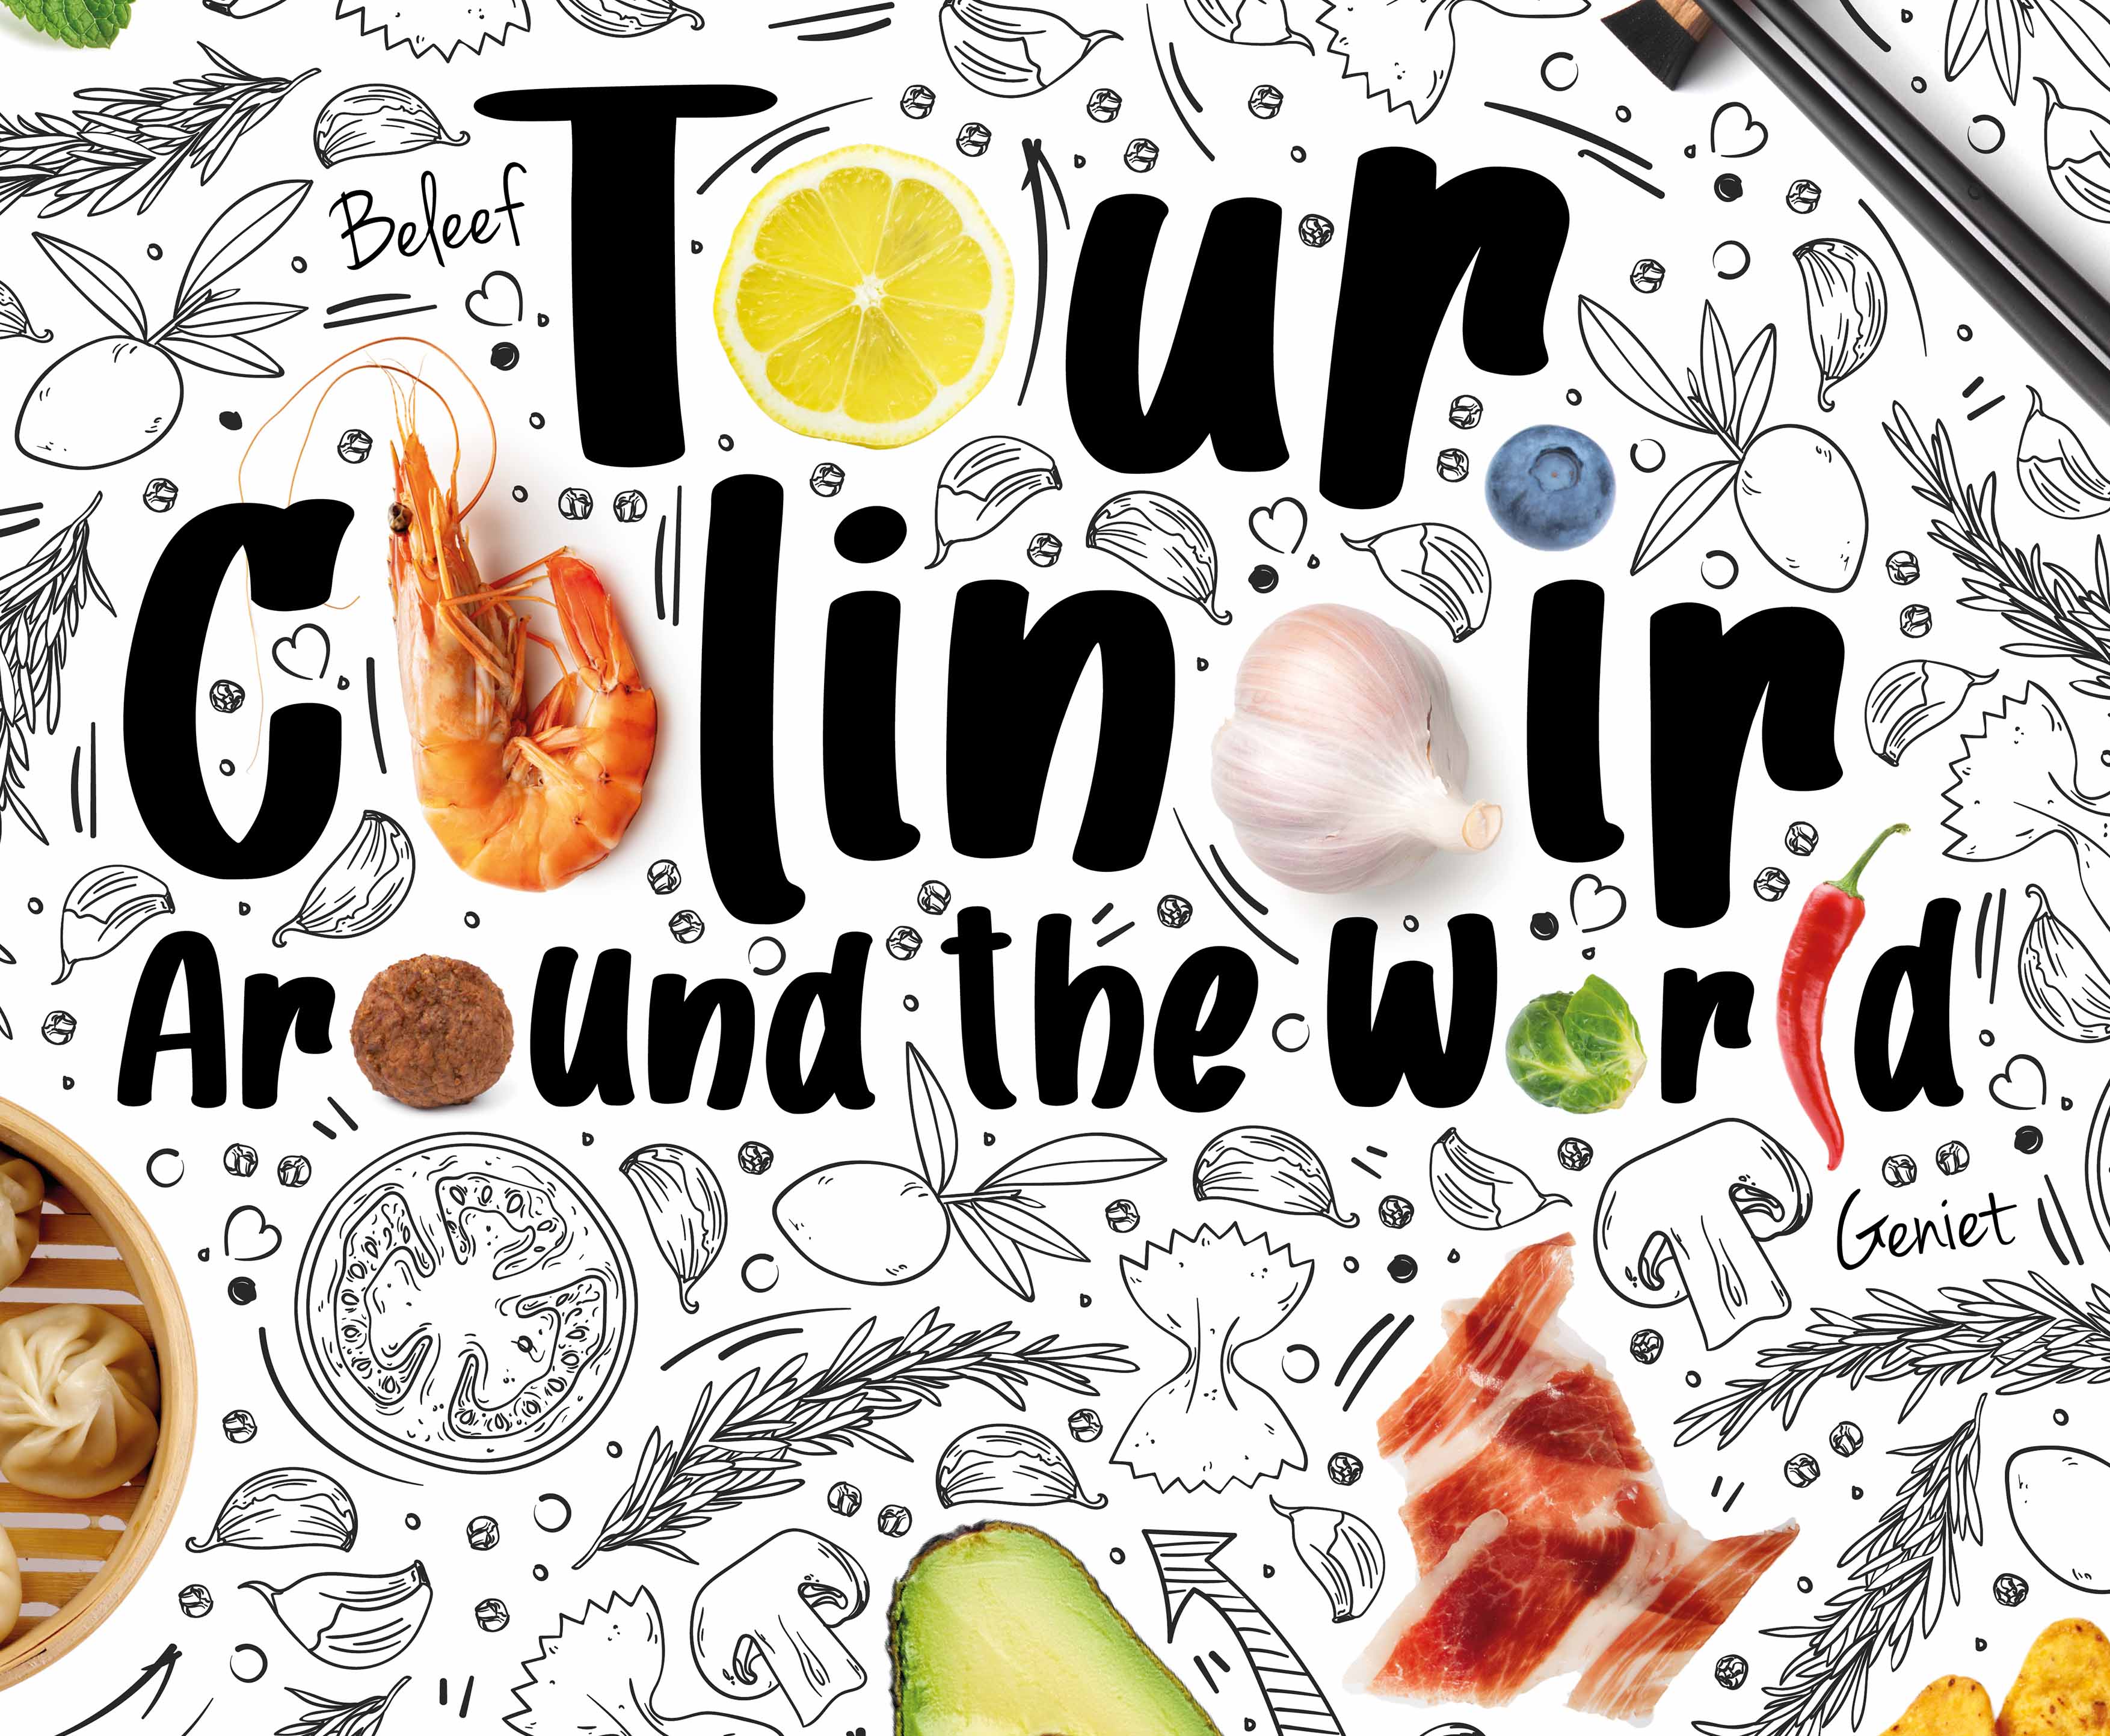 Tour Culinair around the world